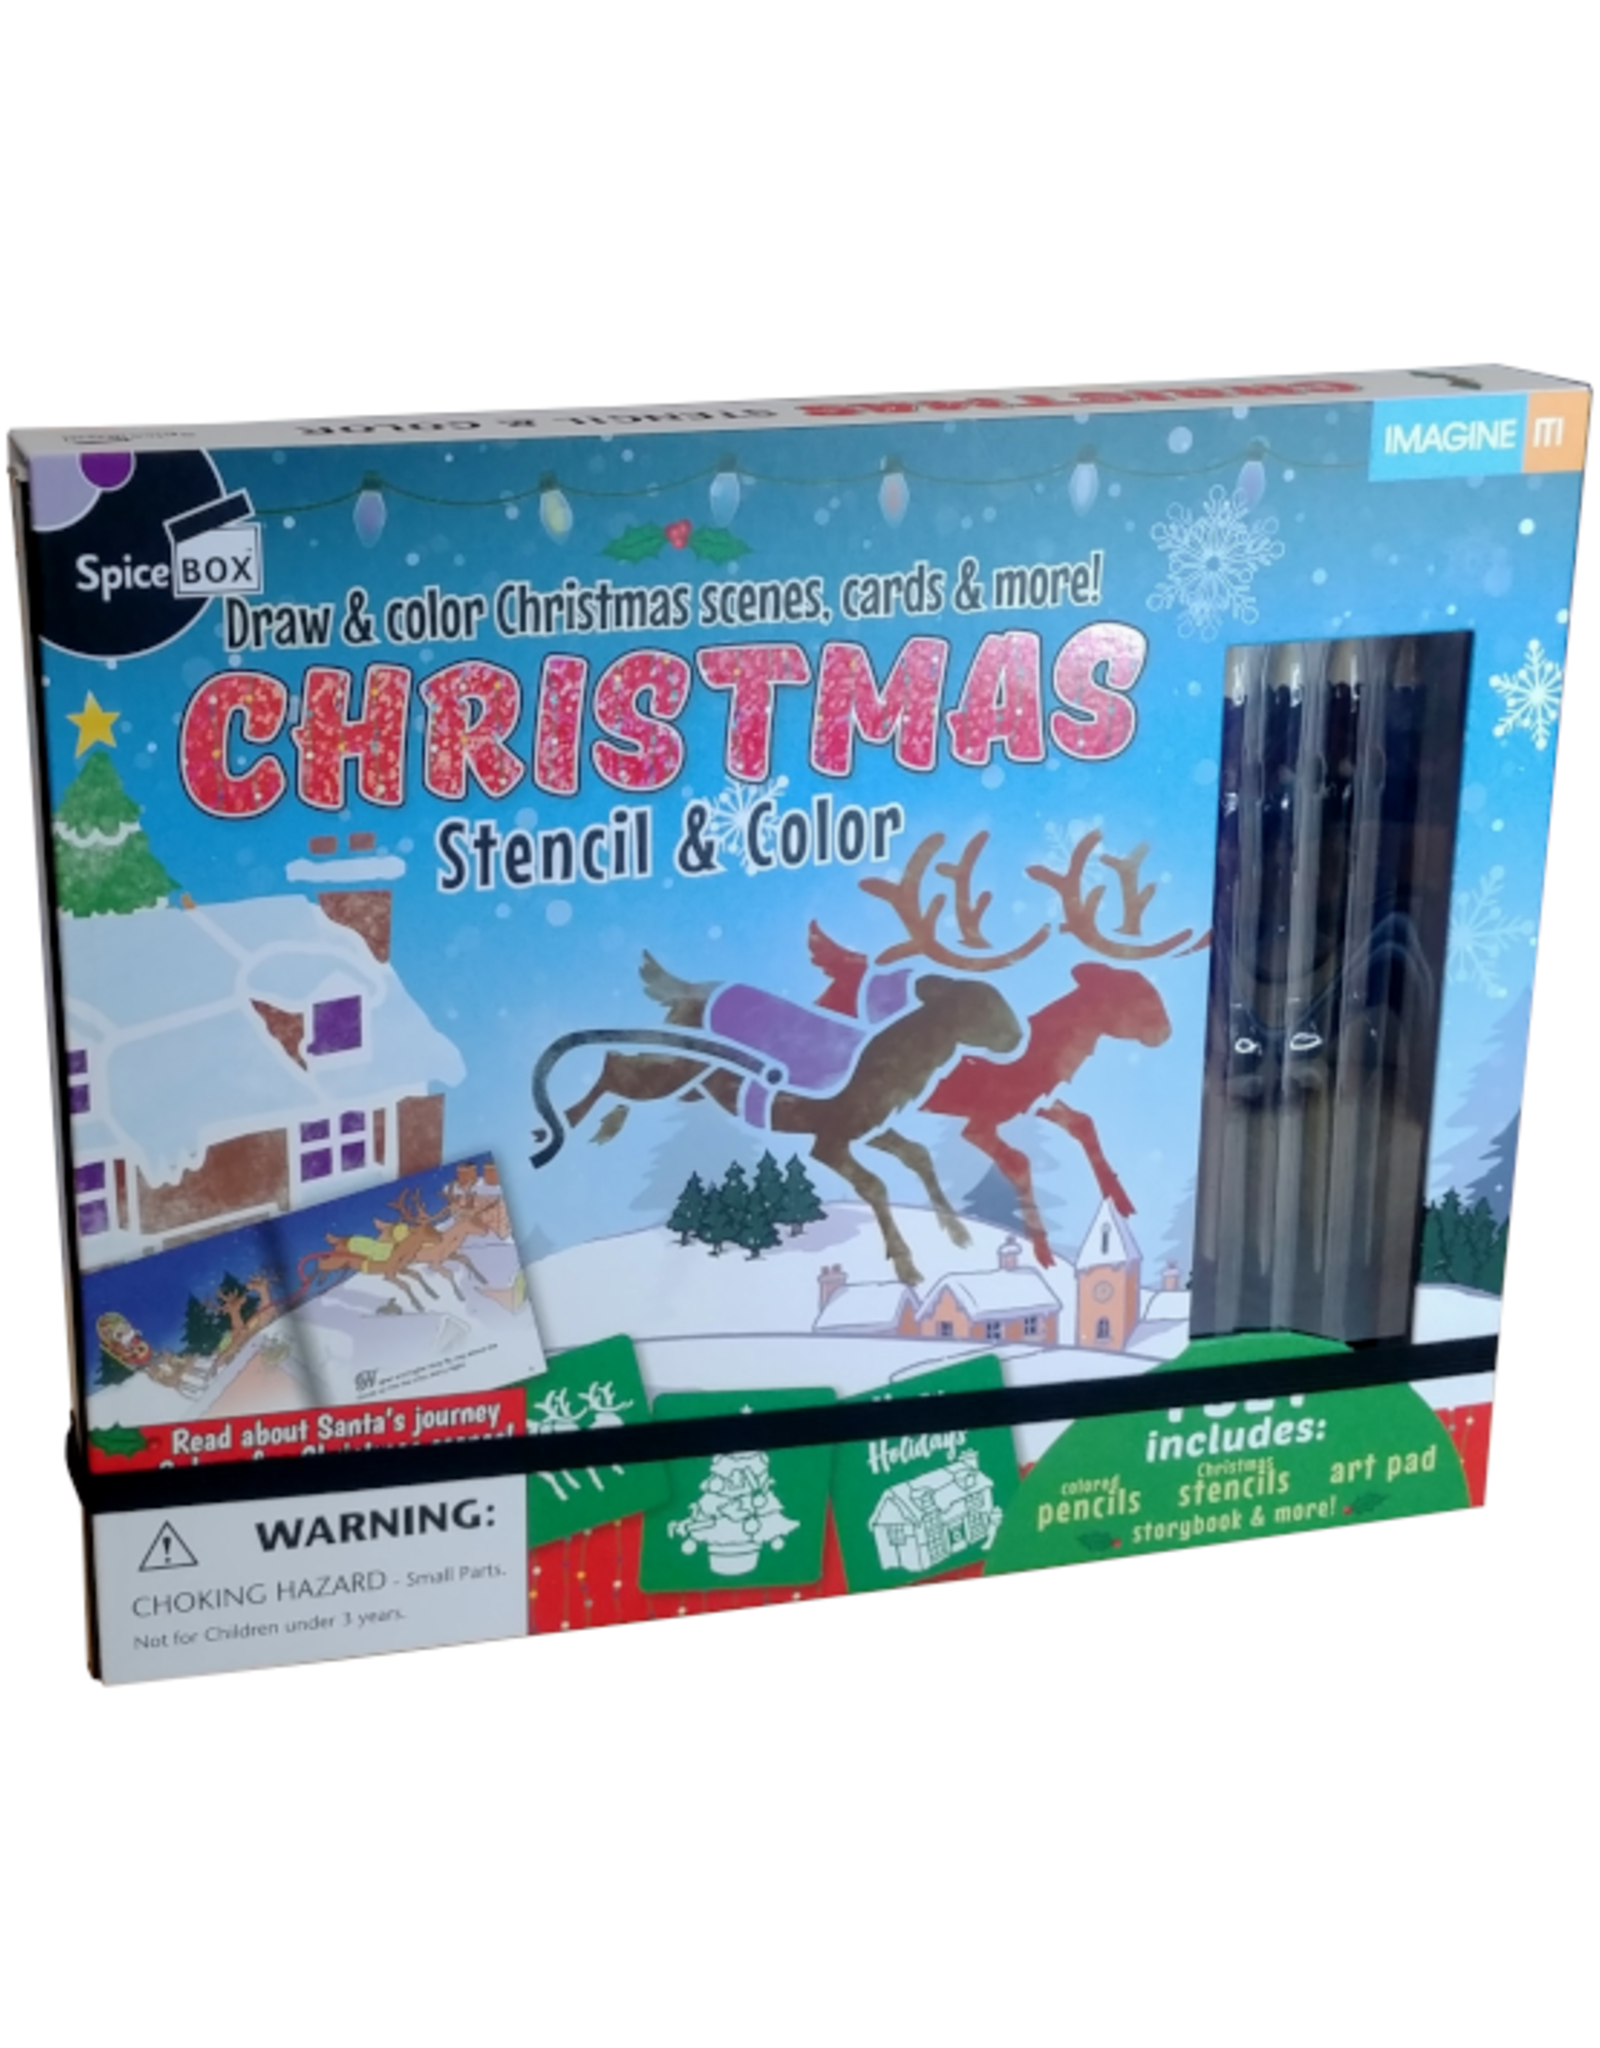 SpiceBox Spicebox - Imagine It! Christmas Stencils